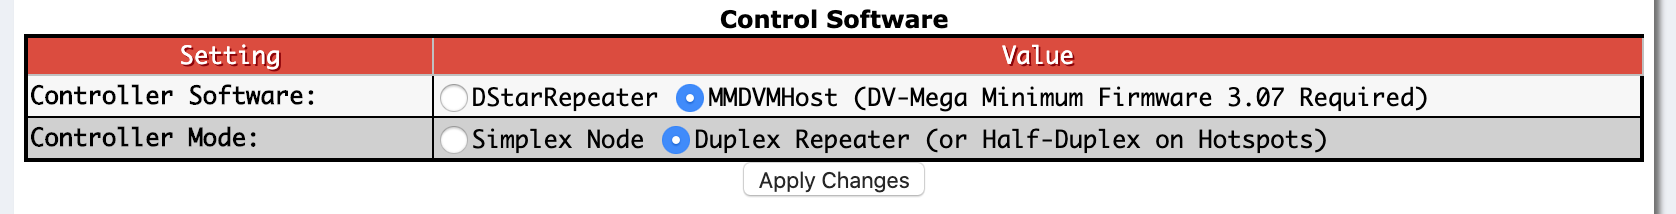 Control Software configuration